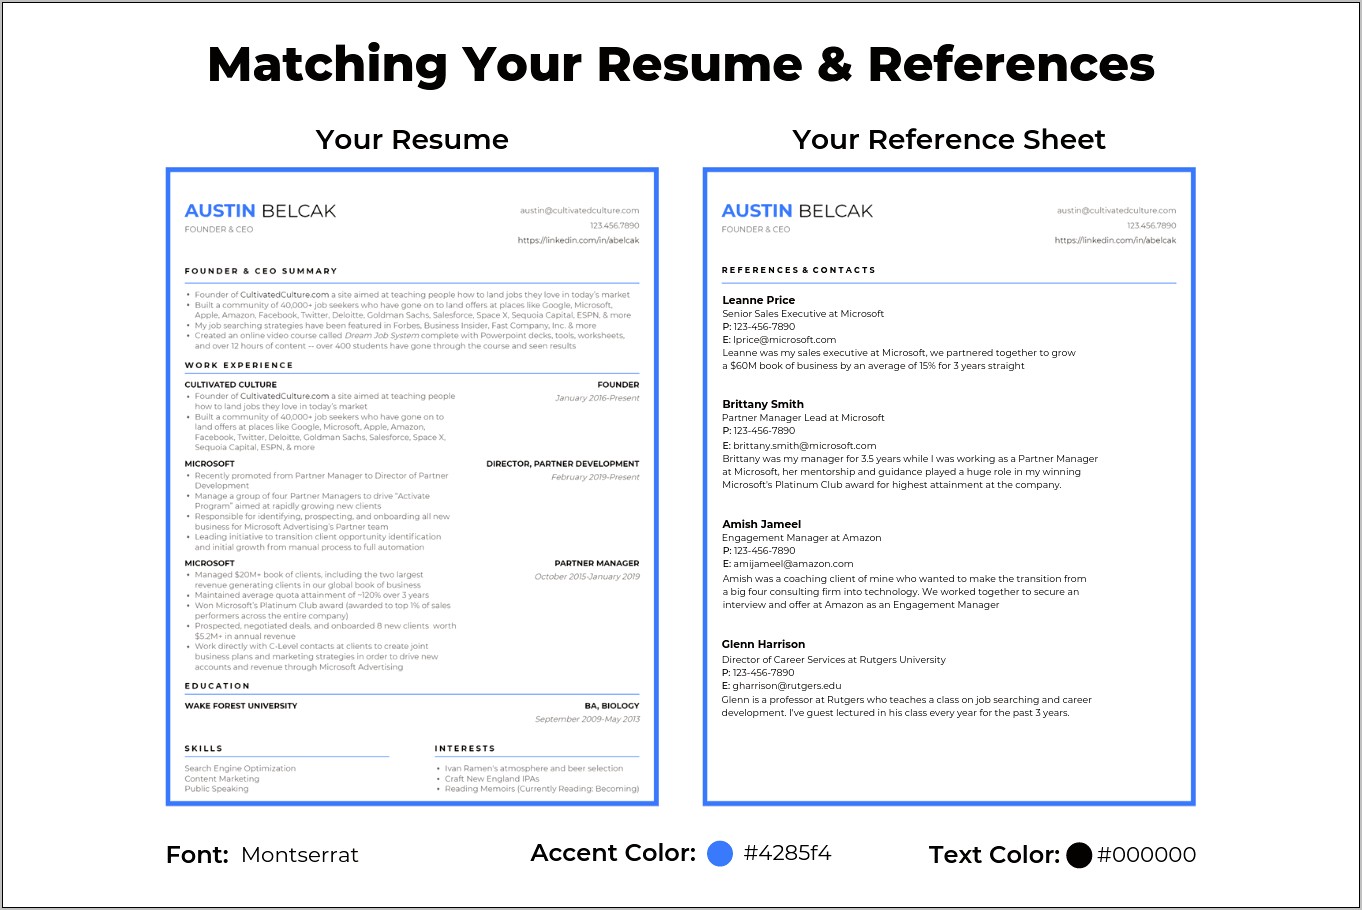 Resume Time Line Of Job References